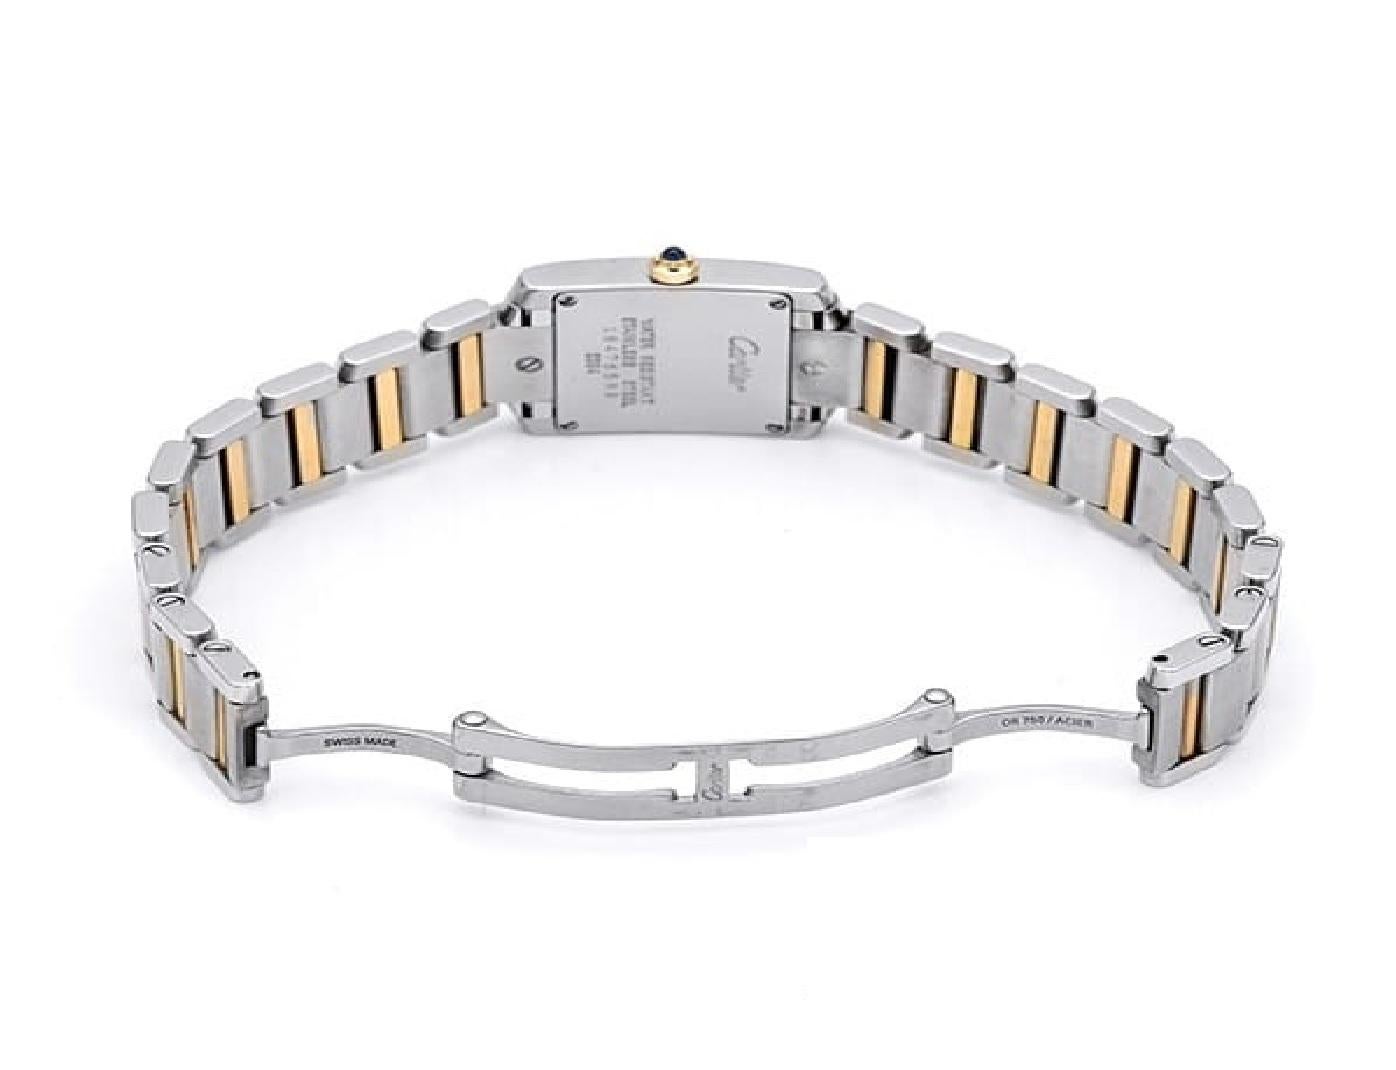 Cartier Tank Française SM W51007Q4 Gold & Steel Ladies Watch - Luxurious 1